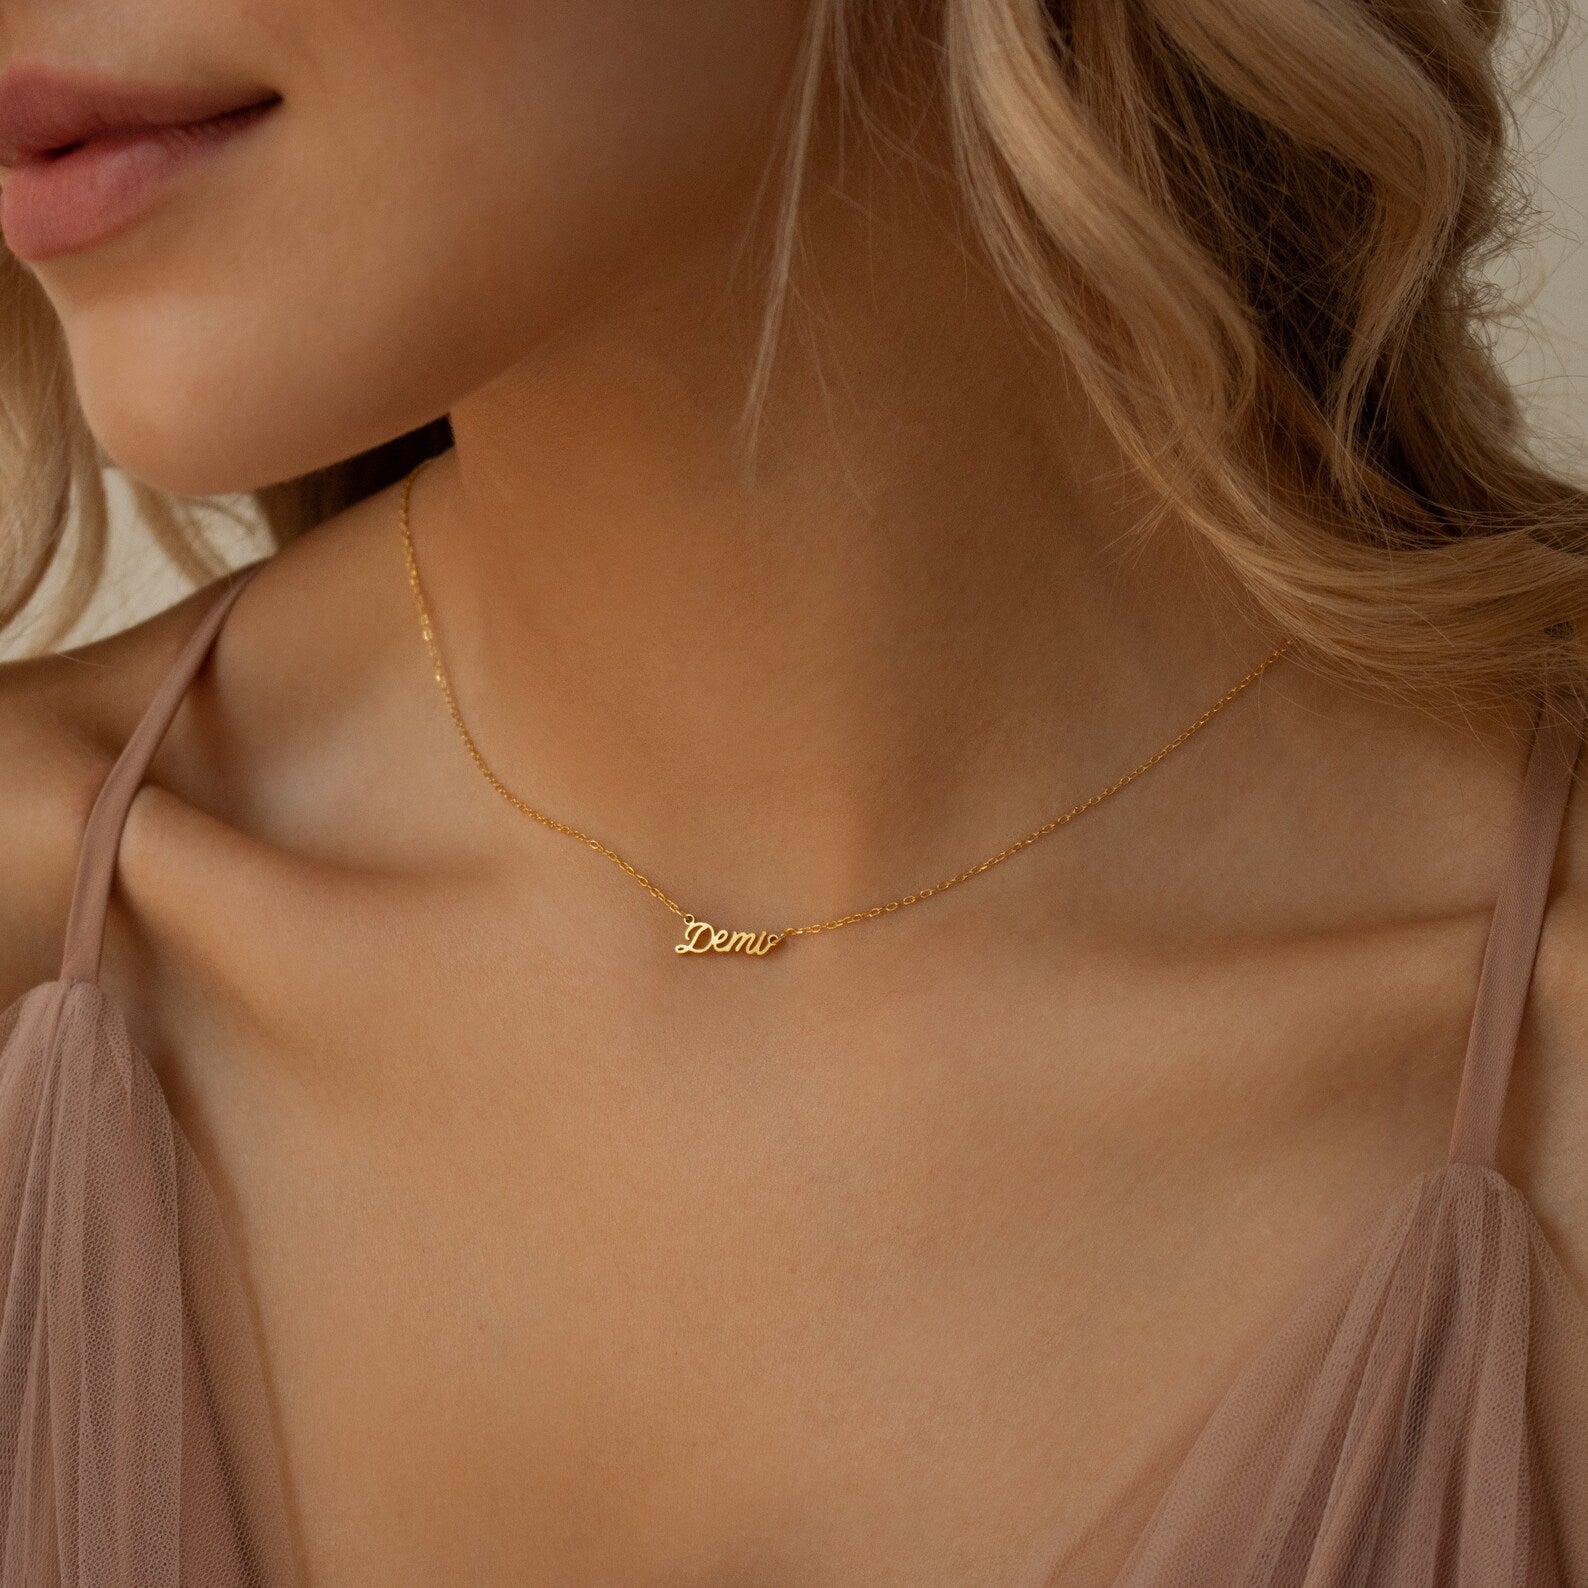 Tiny Paris Name Necklace